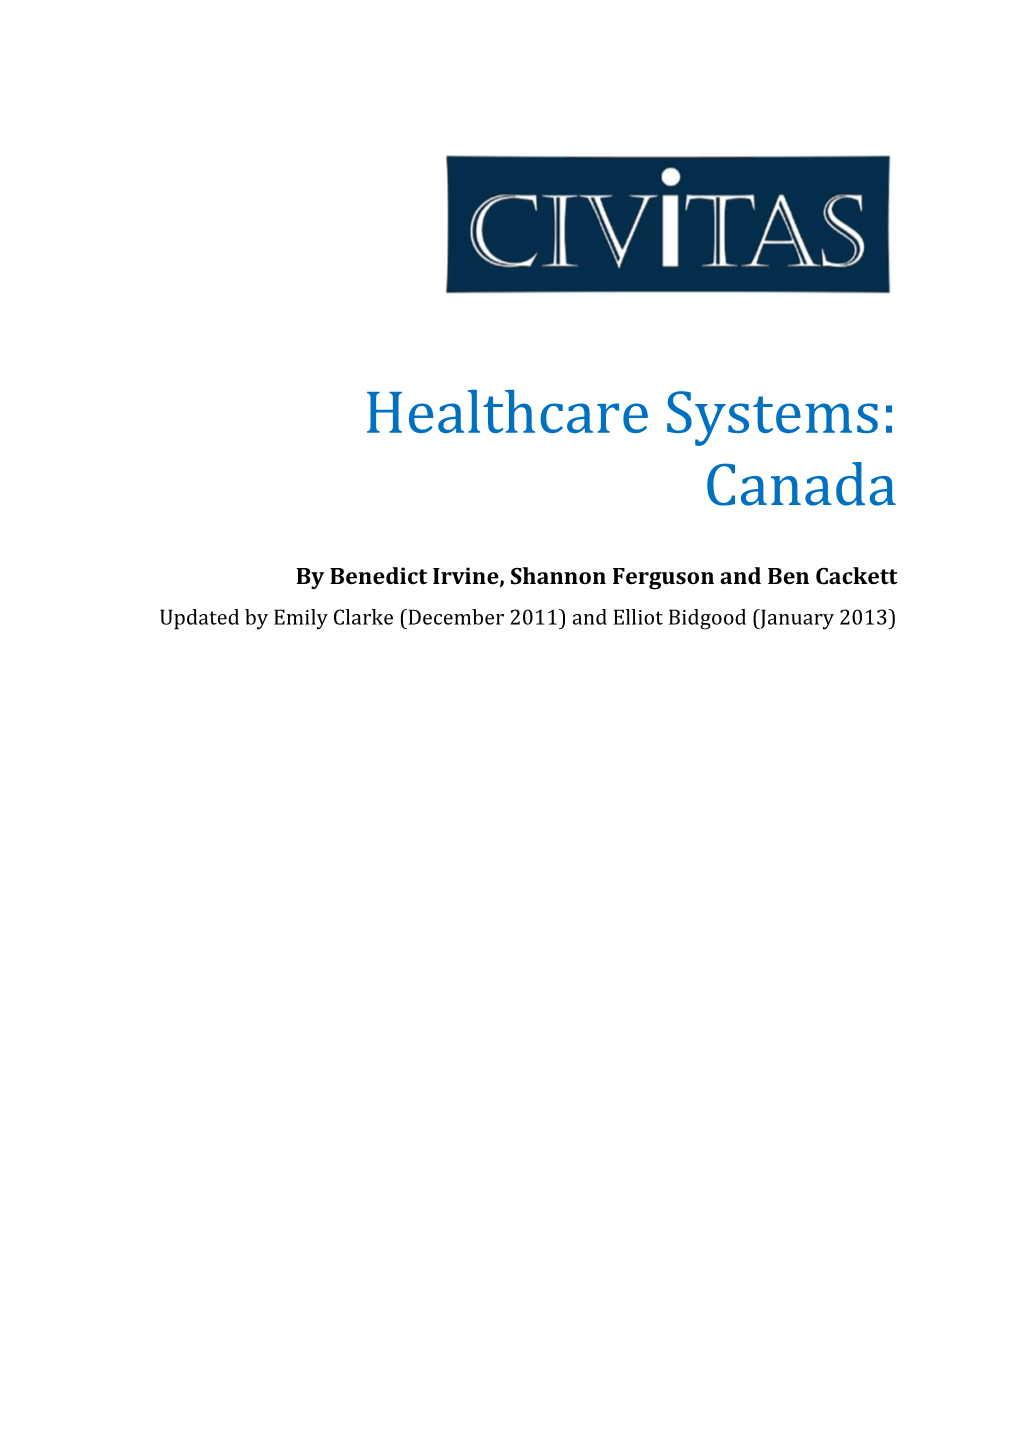 Healthcare Systems: Canada